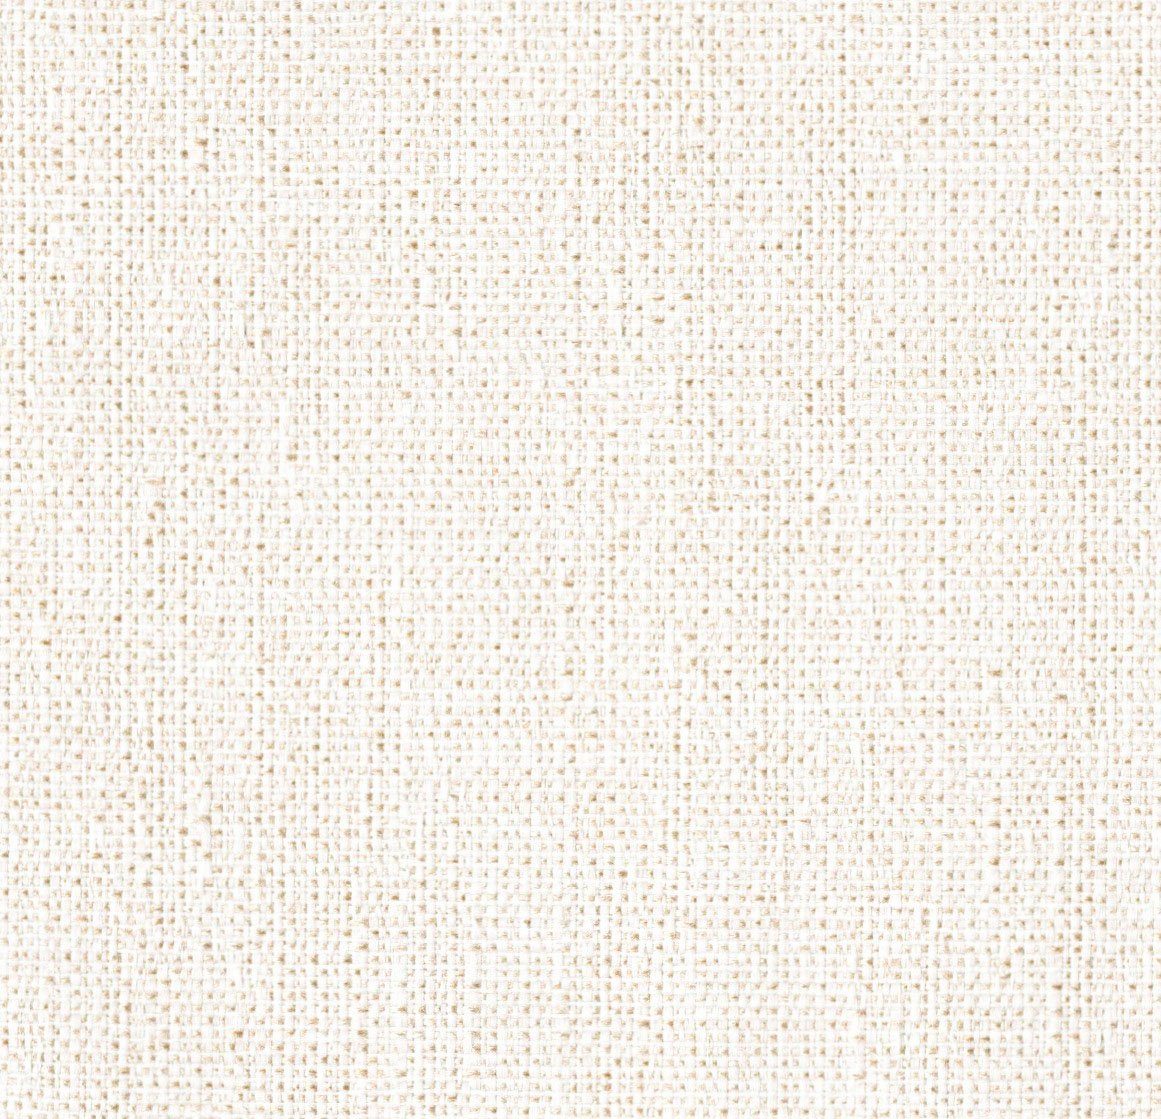 Vorhang Torbole, Wirth, Multifunktionsband (1 blickdicht, Jacquard St), beige